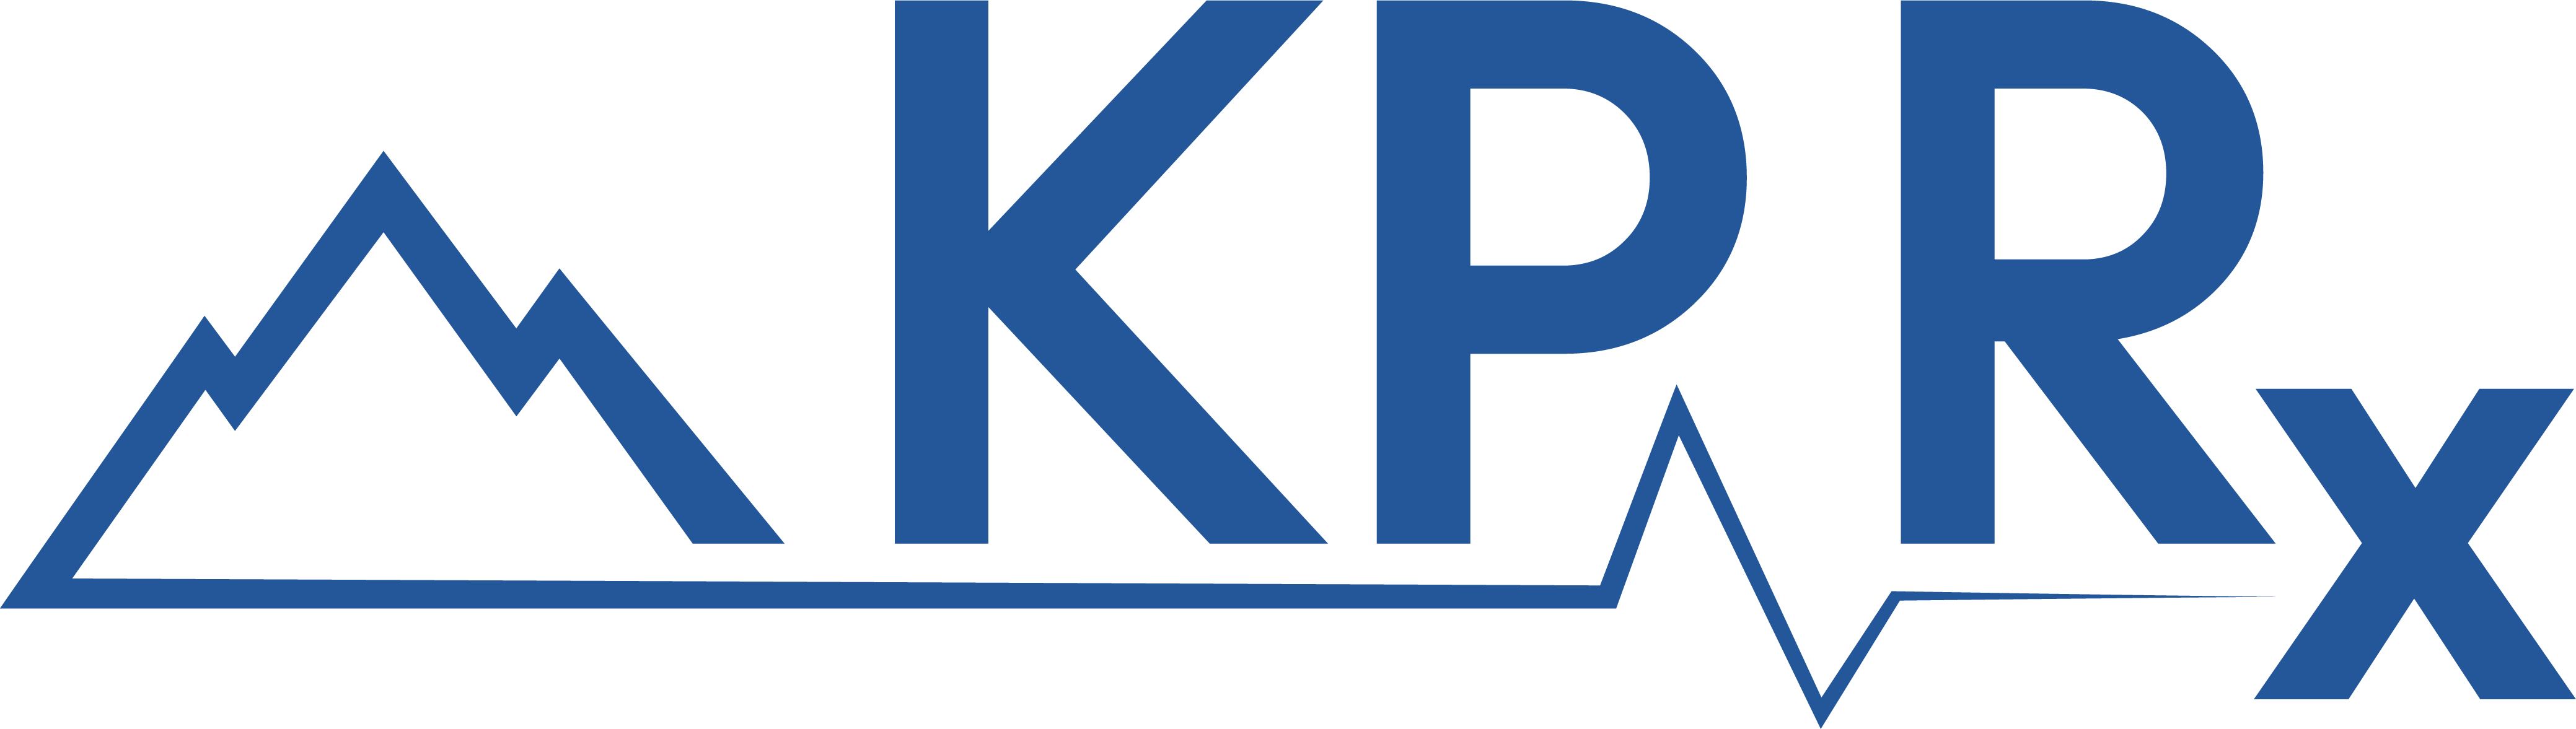 KPRx_logo_Pantone_7685C